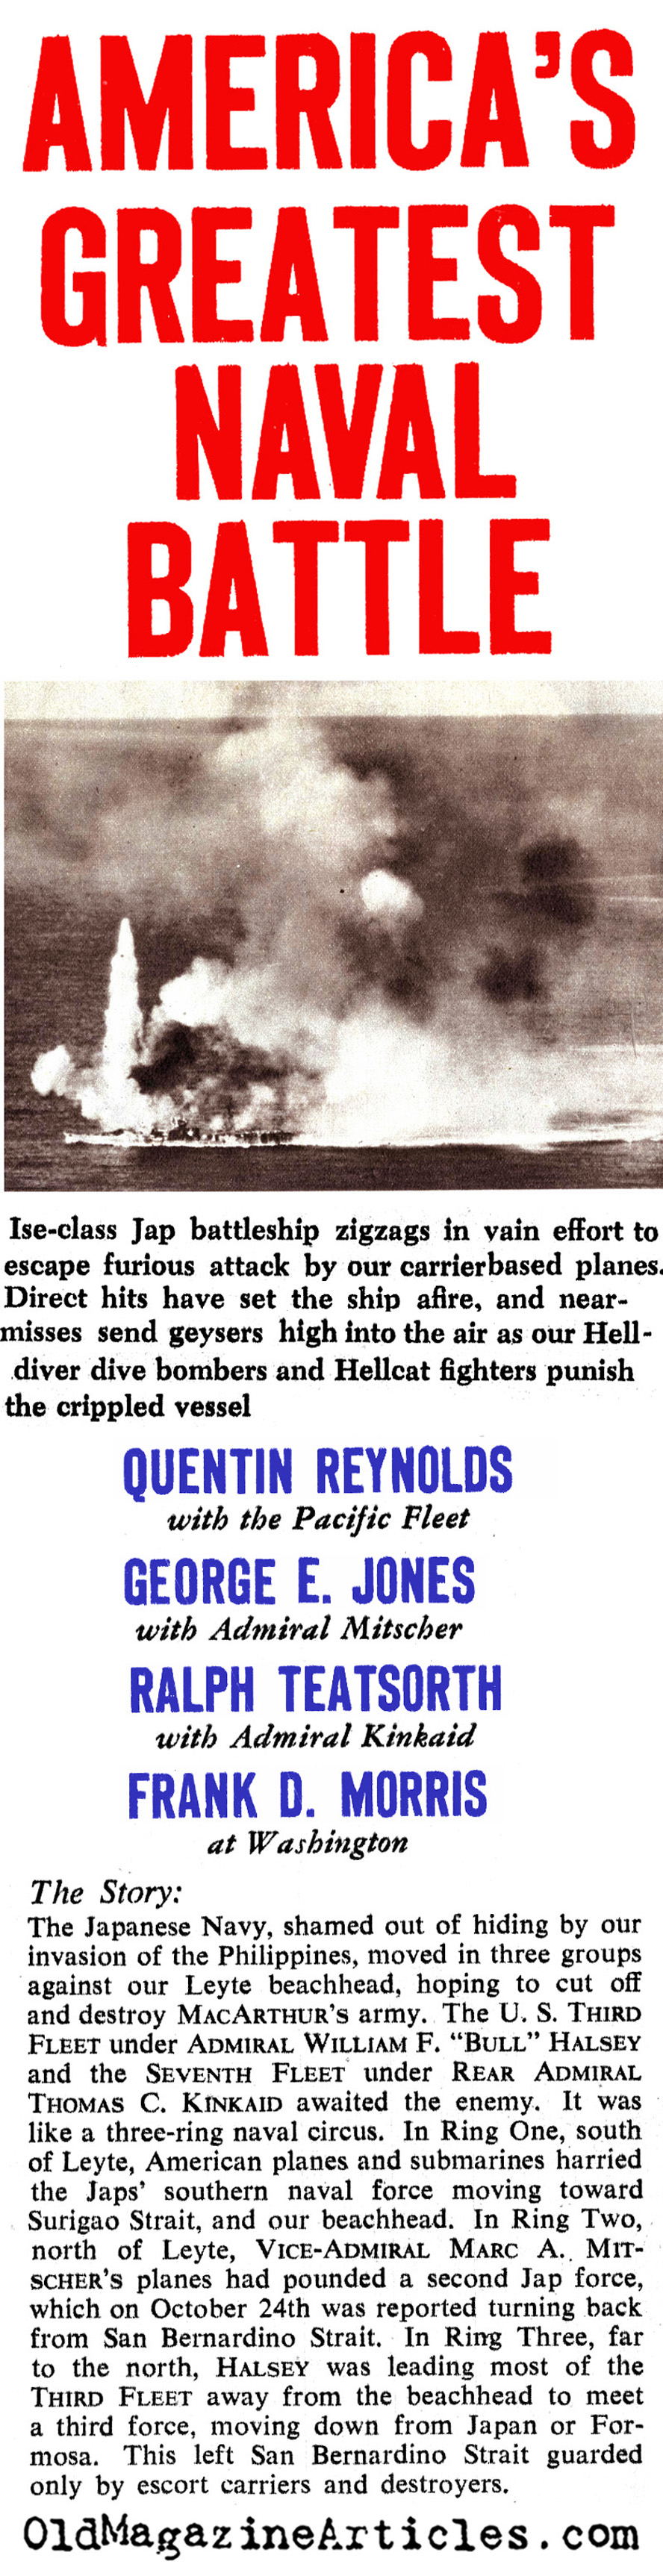 The Greatest Sea Battle [pt. 1] (Collier's Magazine, 1945)